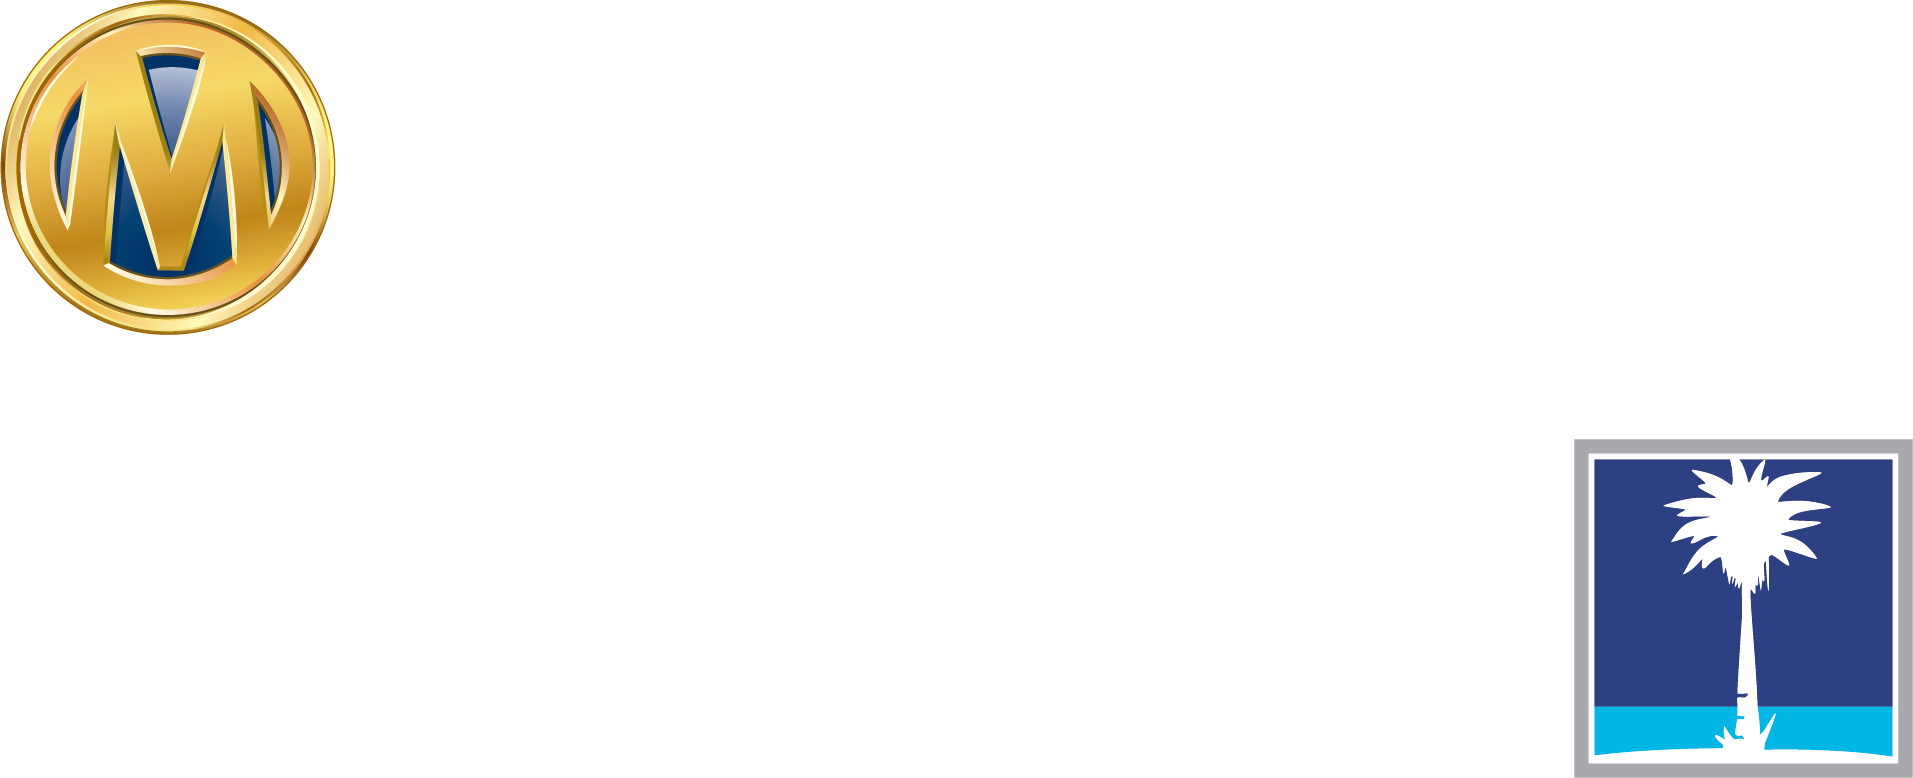 Cox Automotive d.b.a. Manheim Tampa logo